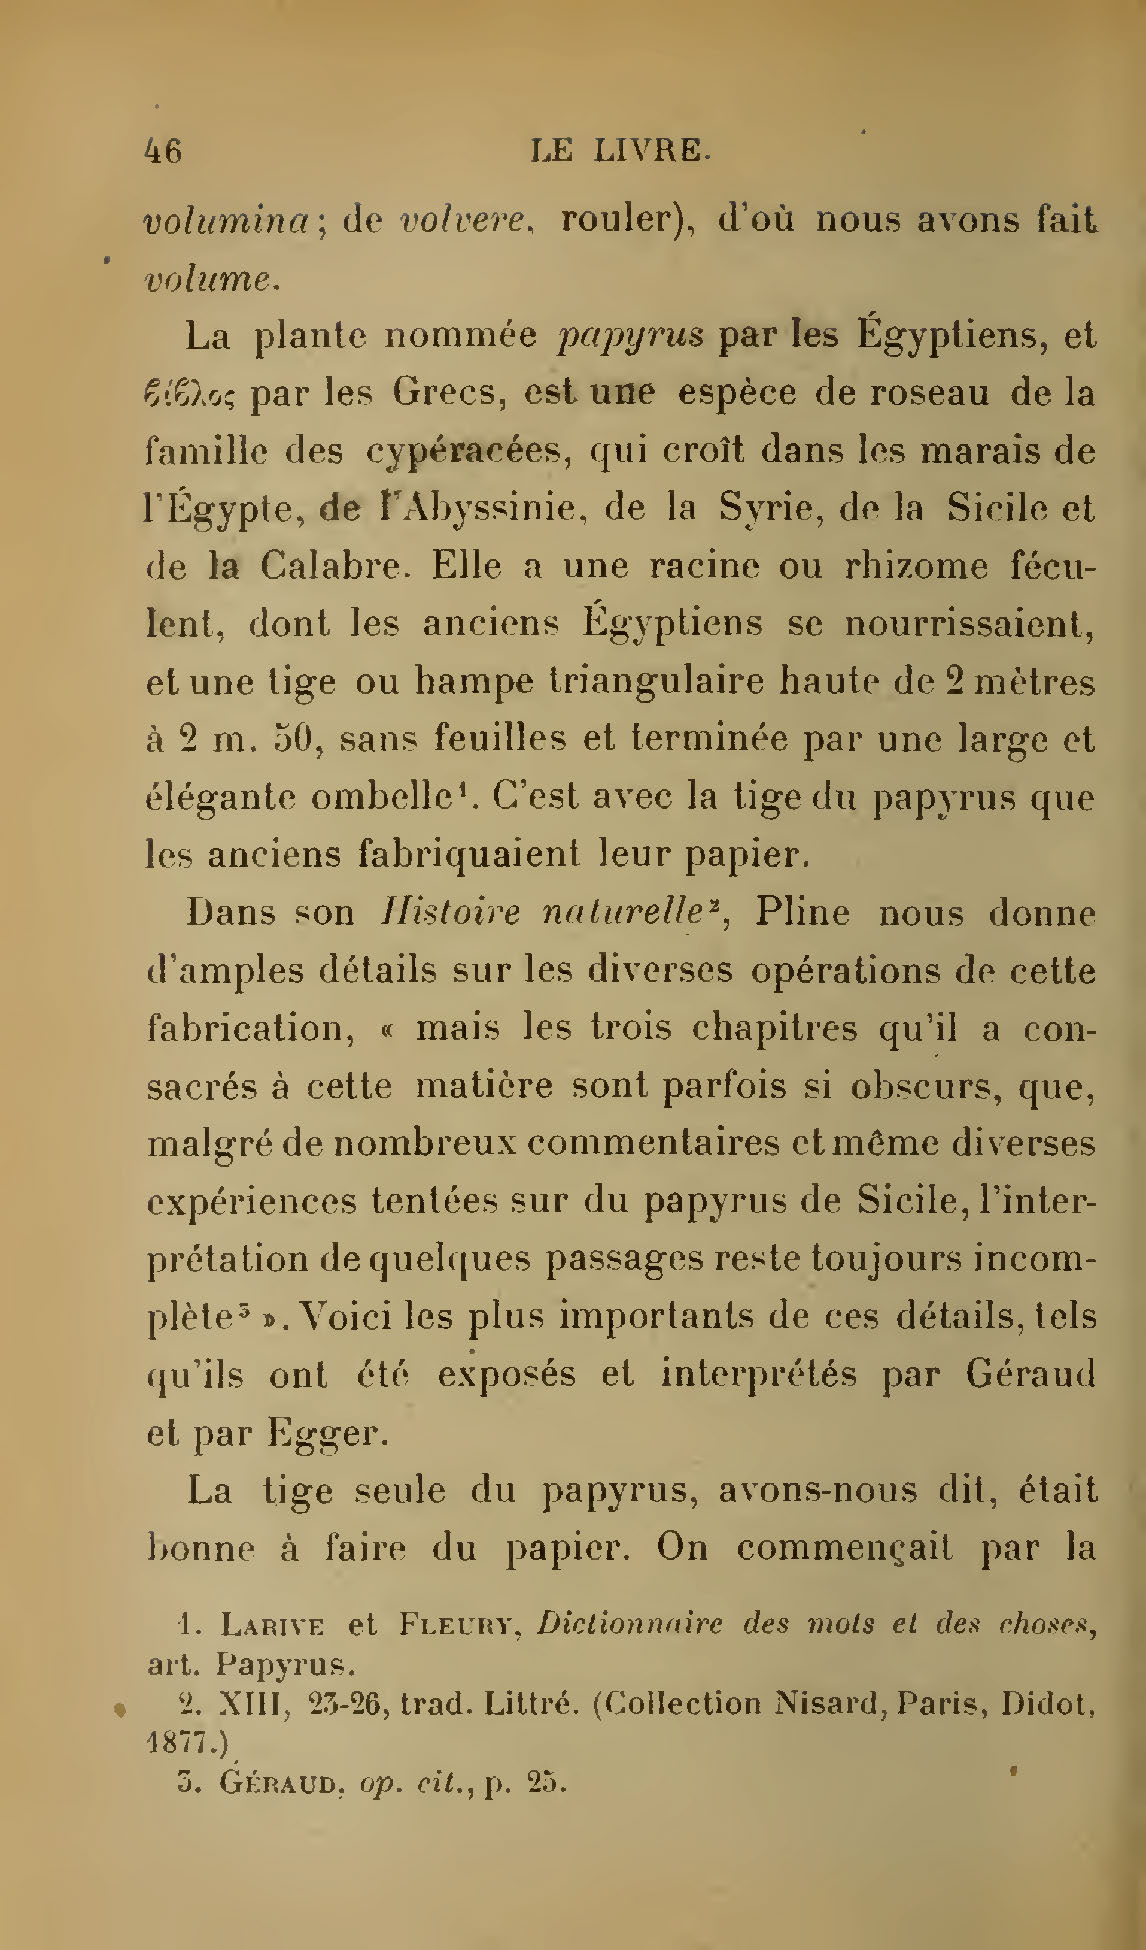 Albert Cim, Le Livre, t. I, p. 46.